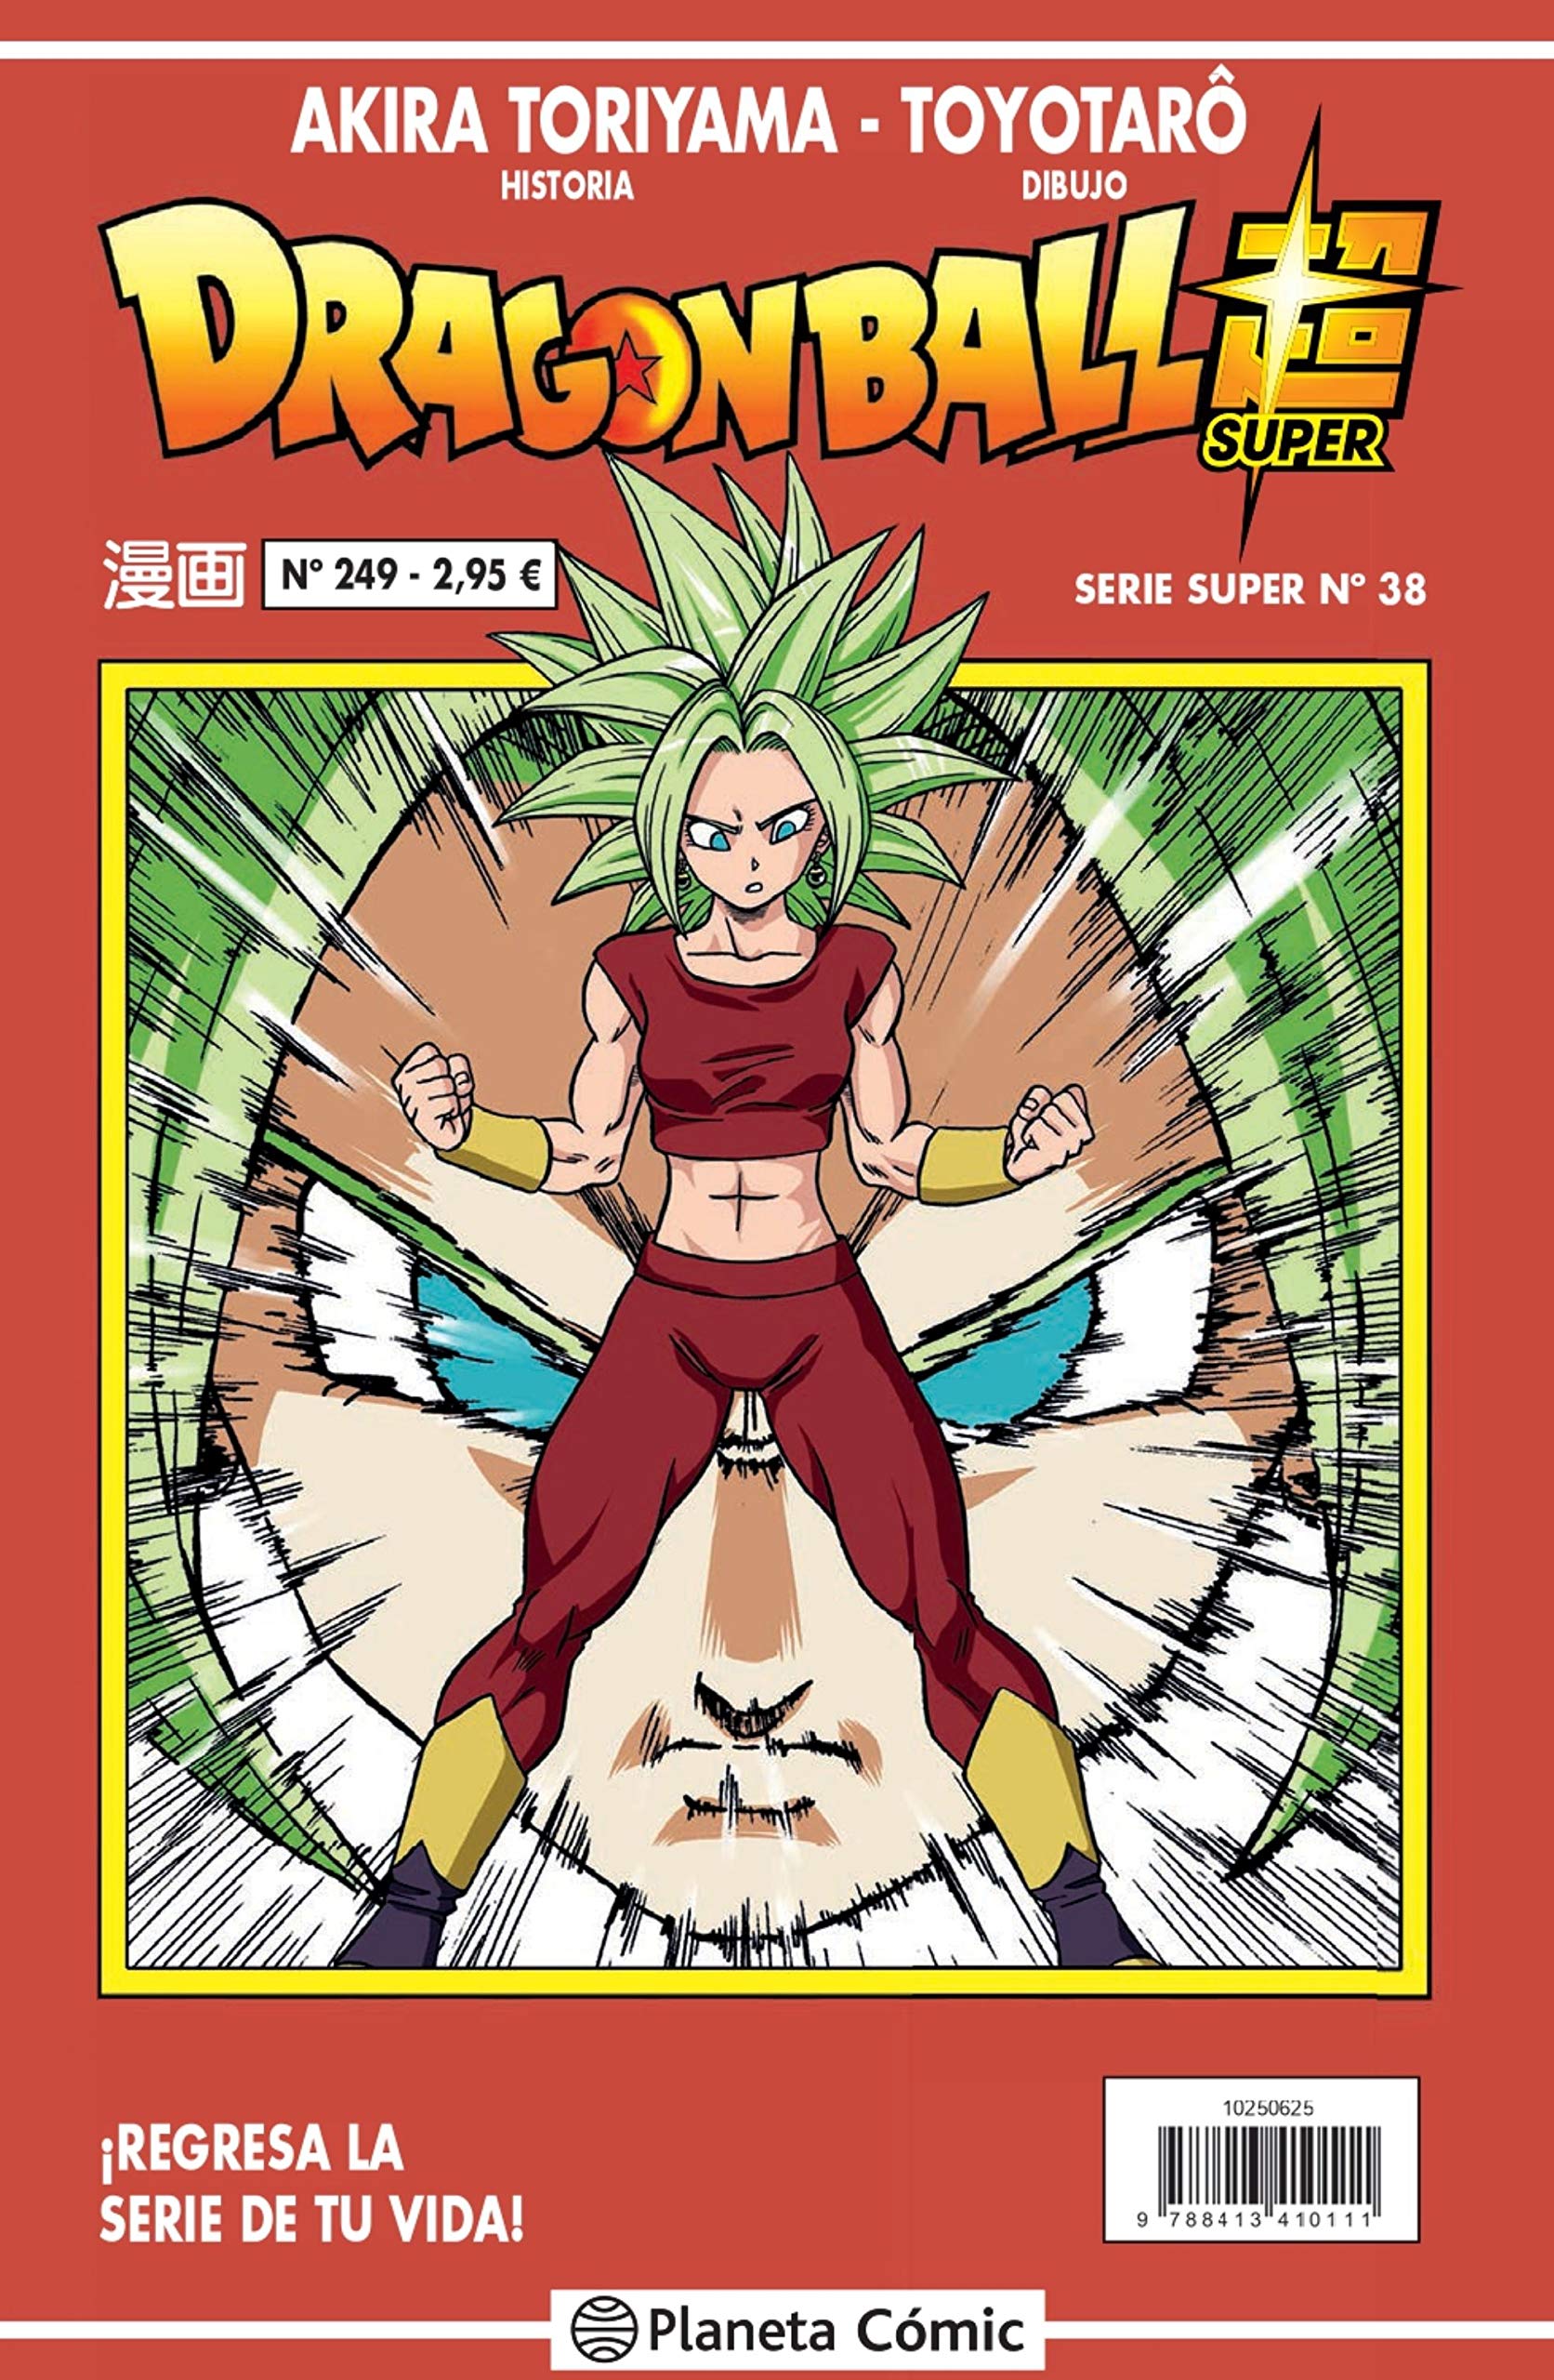 Dragon Ball Super 92 Serie roja 303 Manga